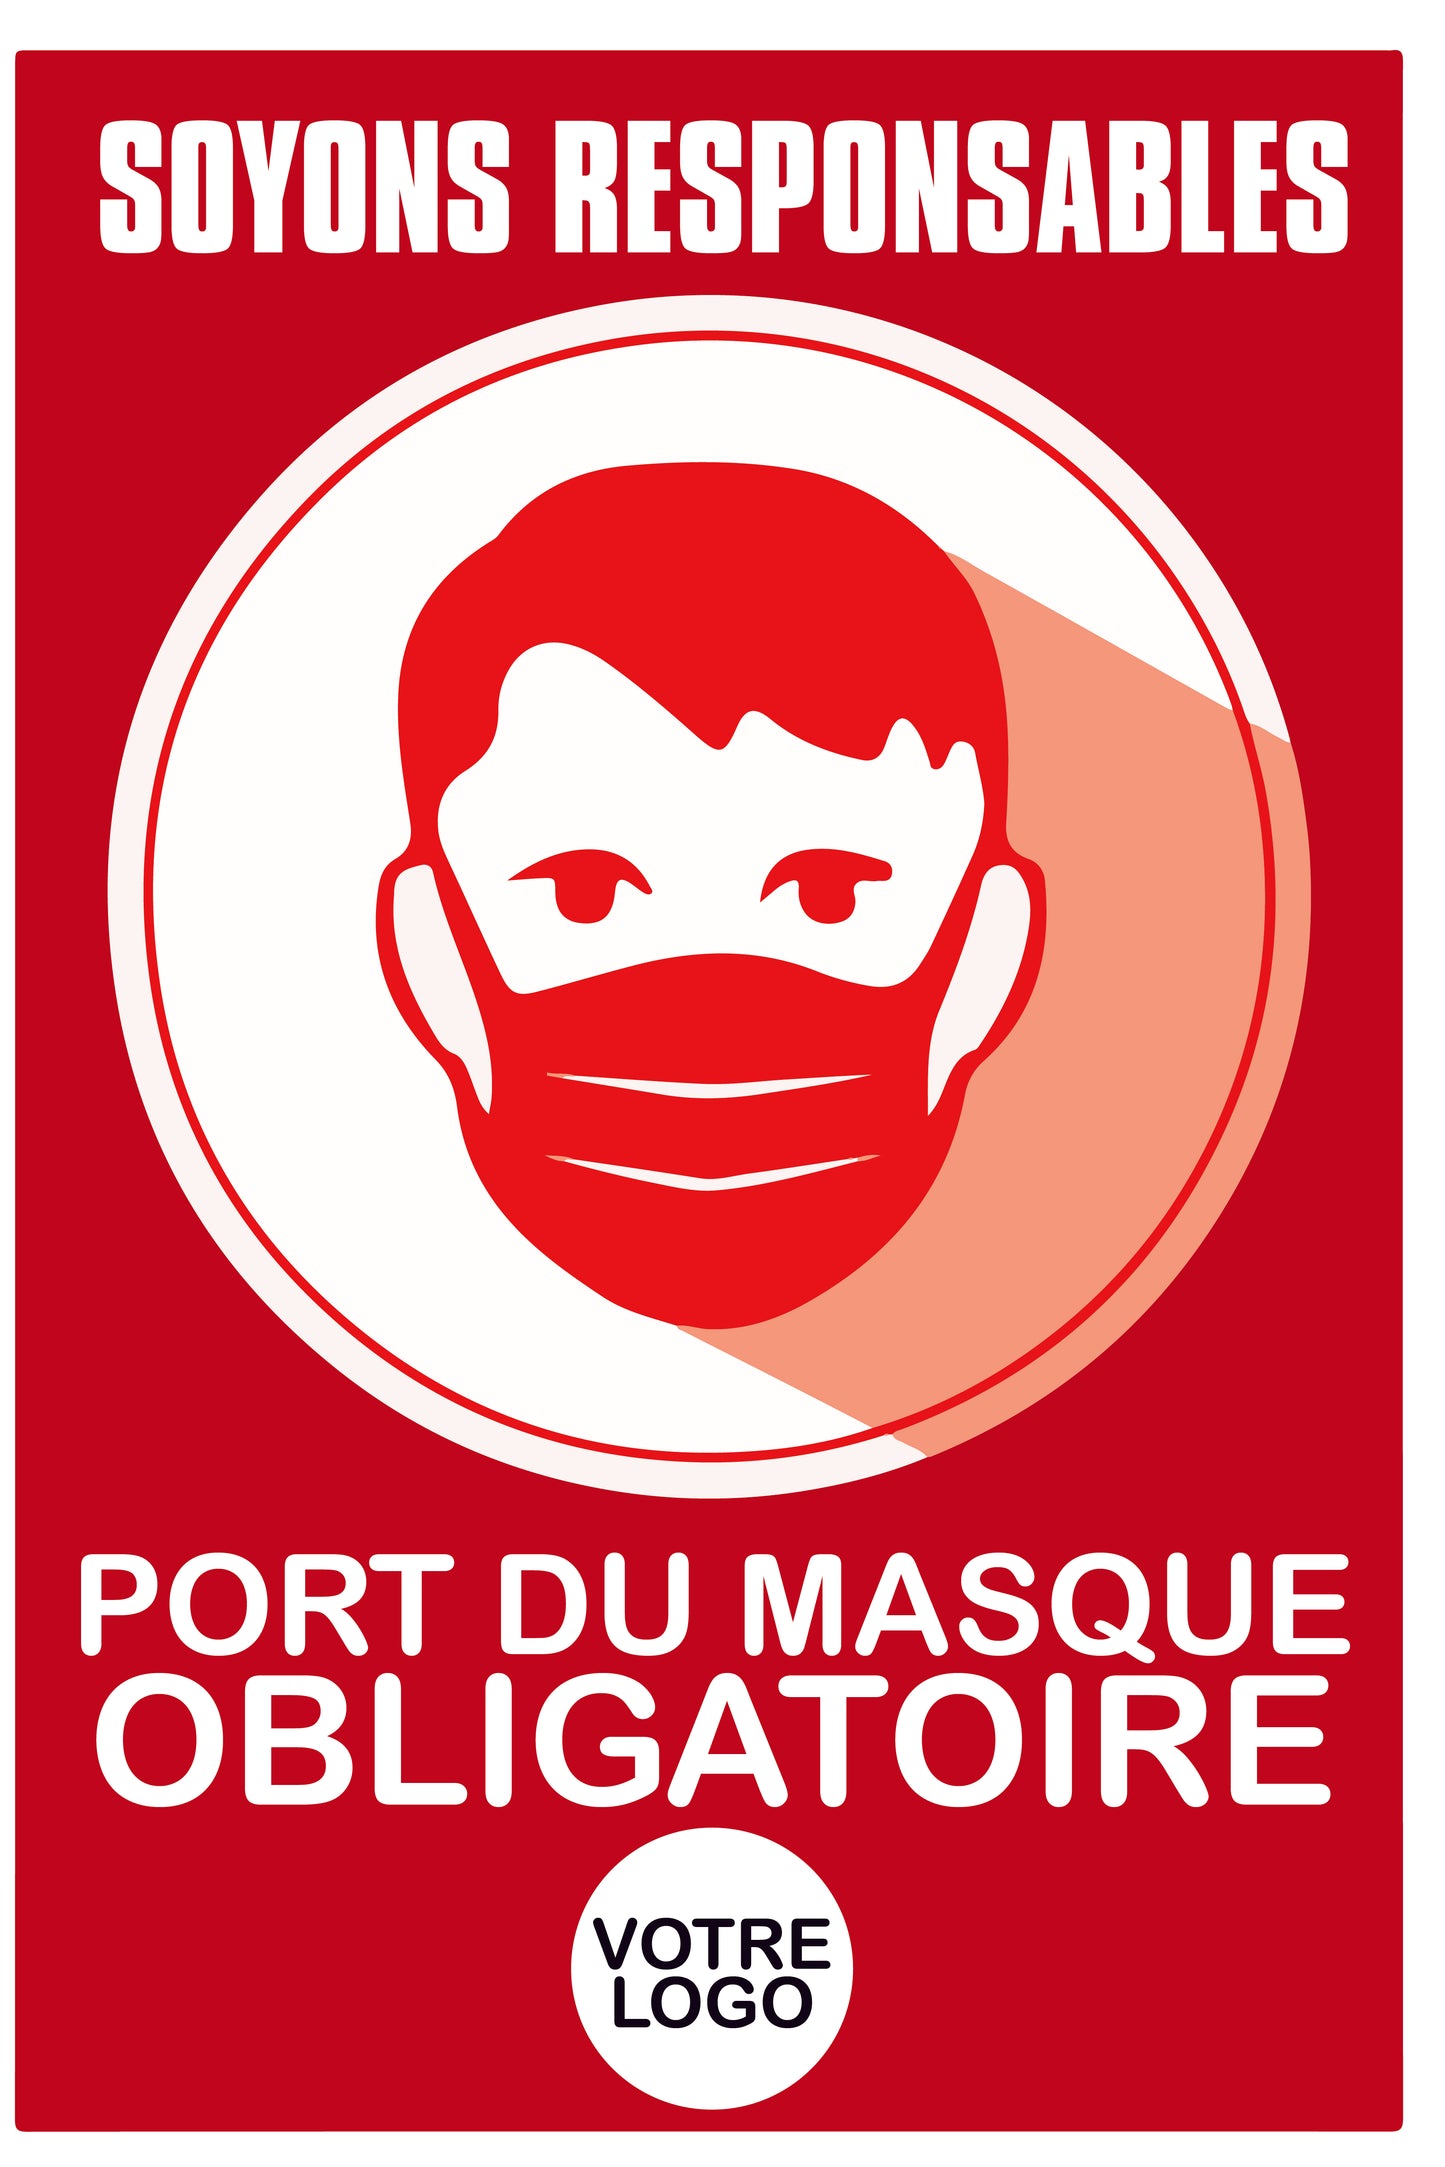 Mask required poster / Affiche port du masque OBLIGATOIRE